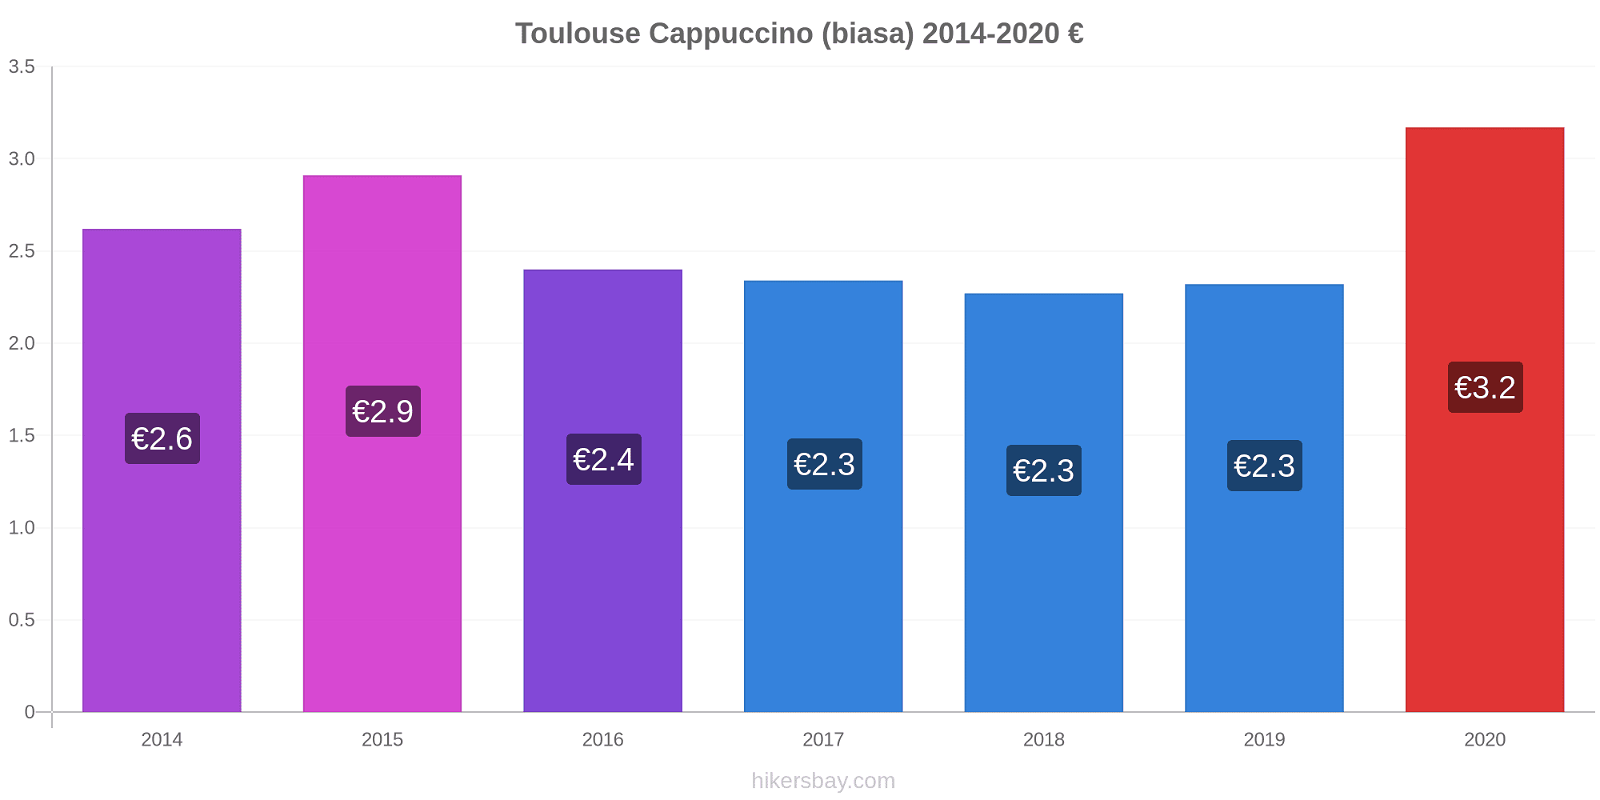 Toulouse perubahan harga Cappuccino (biasa) hikersbay.com